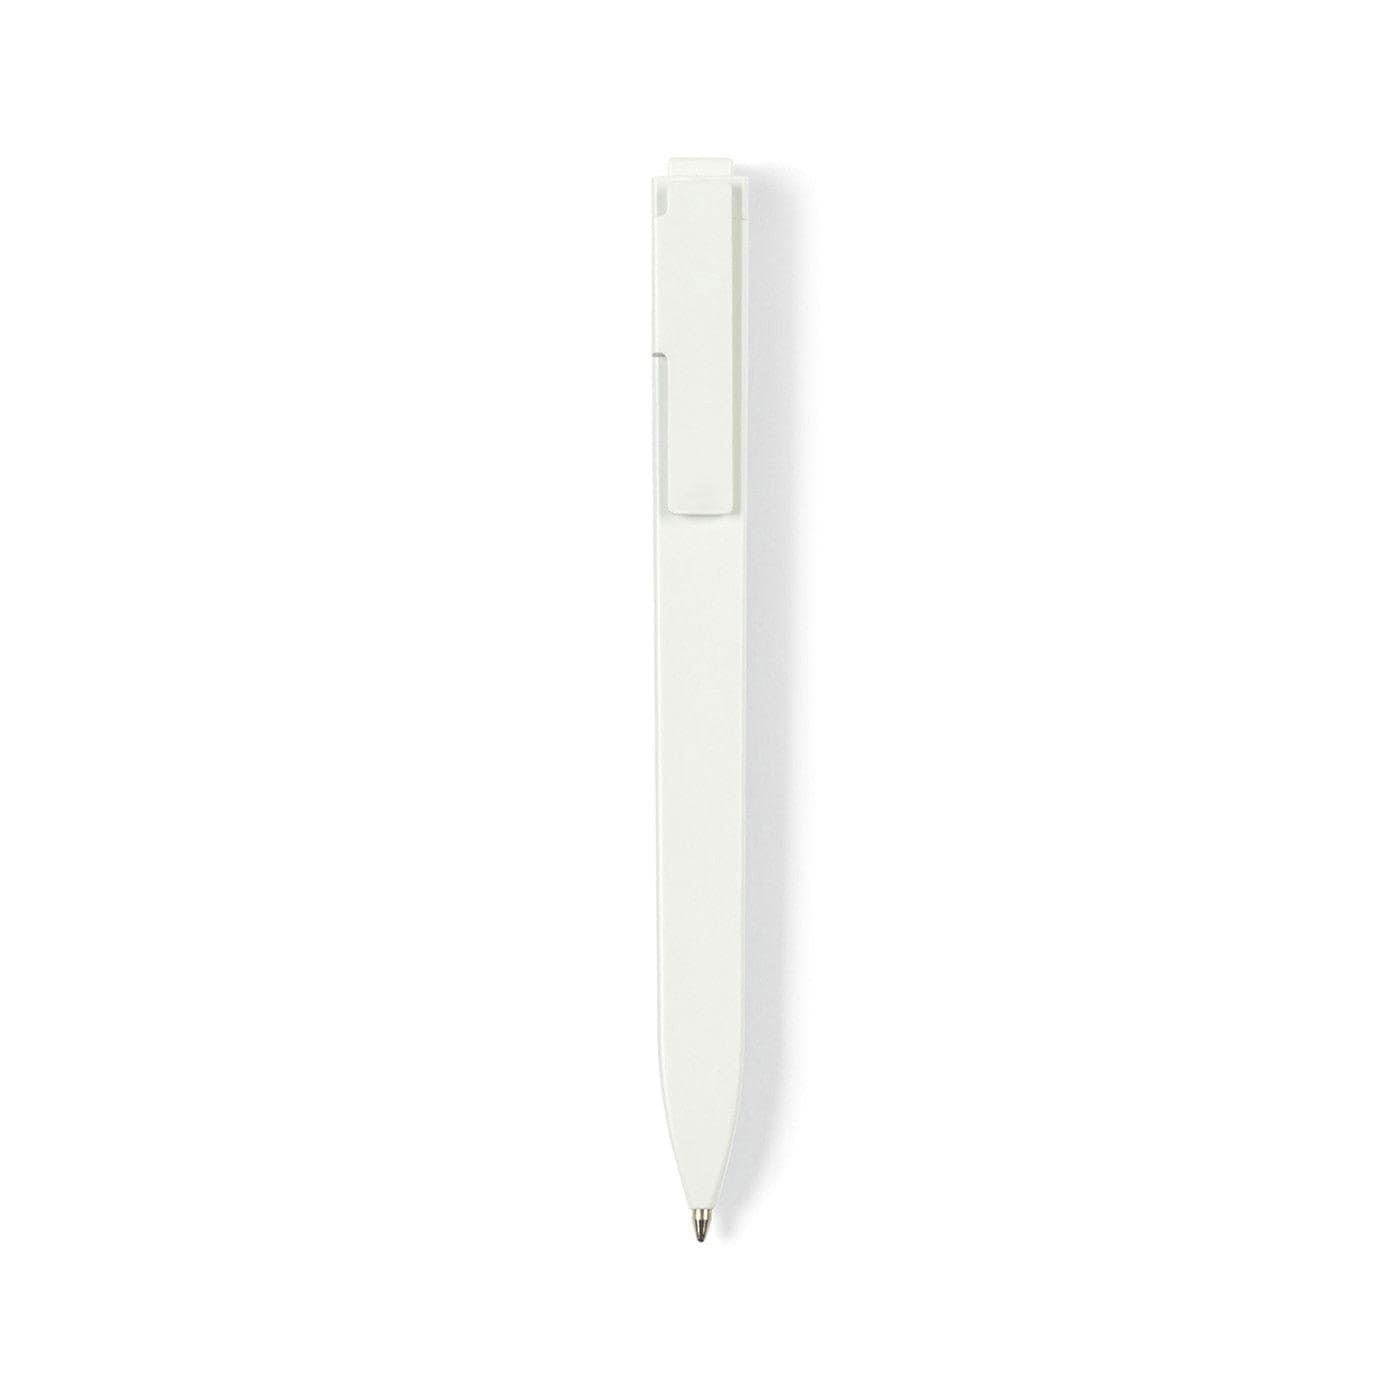 Home  Carpe Diem Markers. Moleskine Roller Pen Plus White